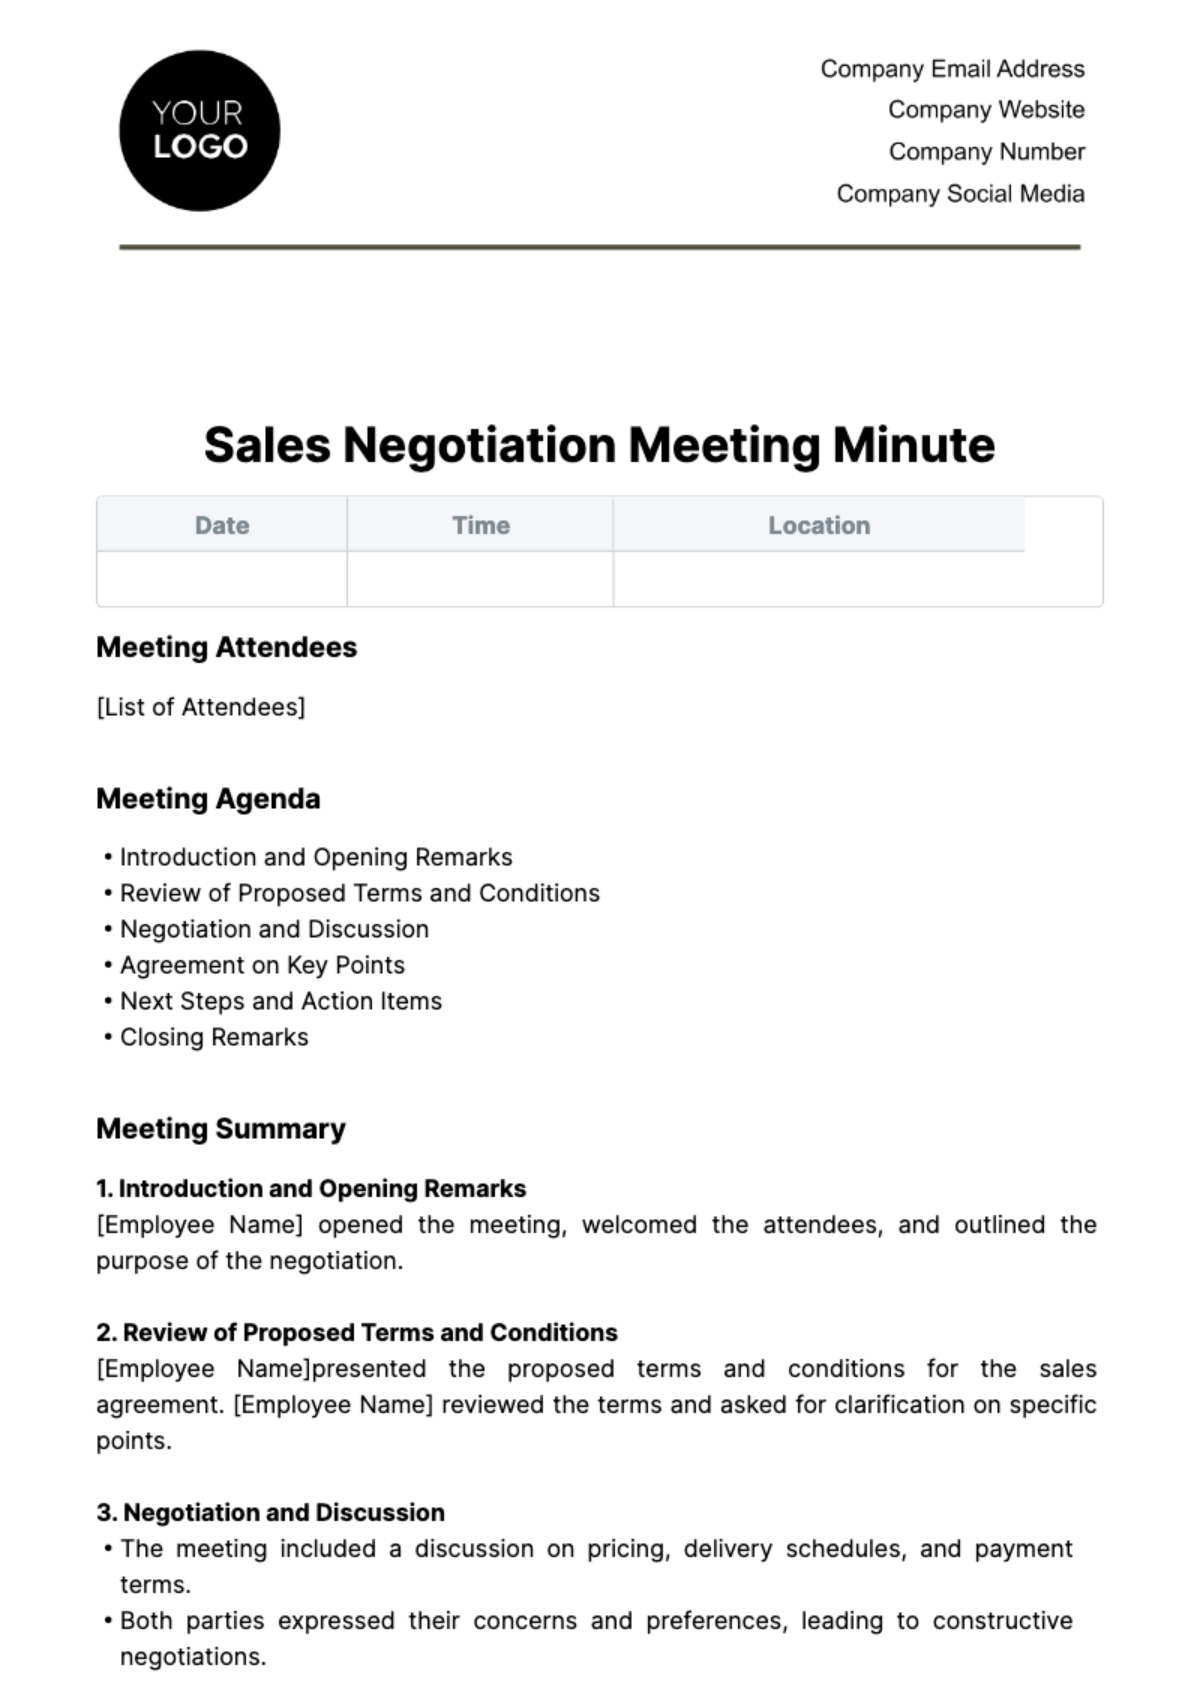 Sales Negotiation Meeting Minute Template